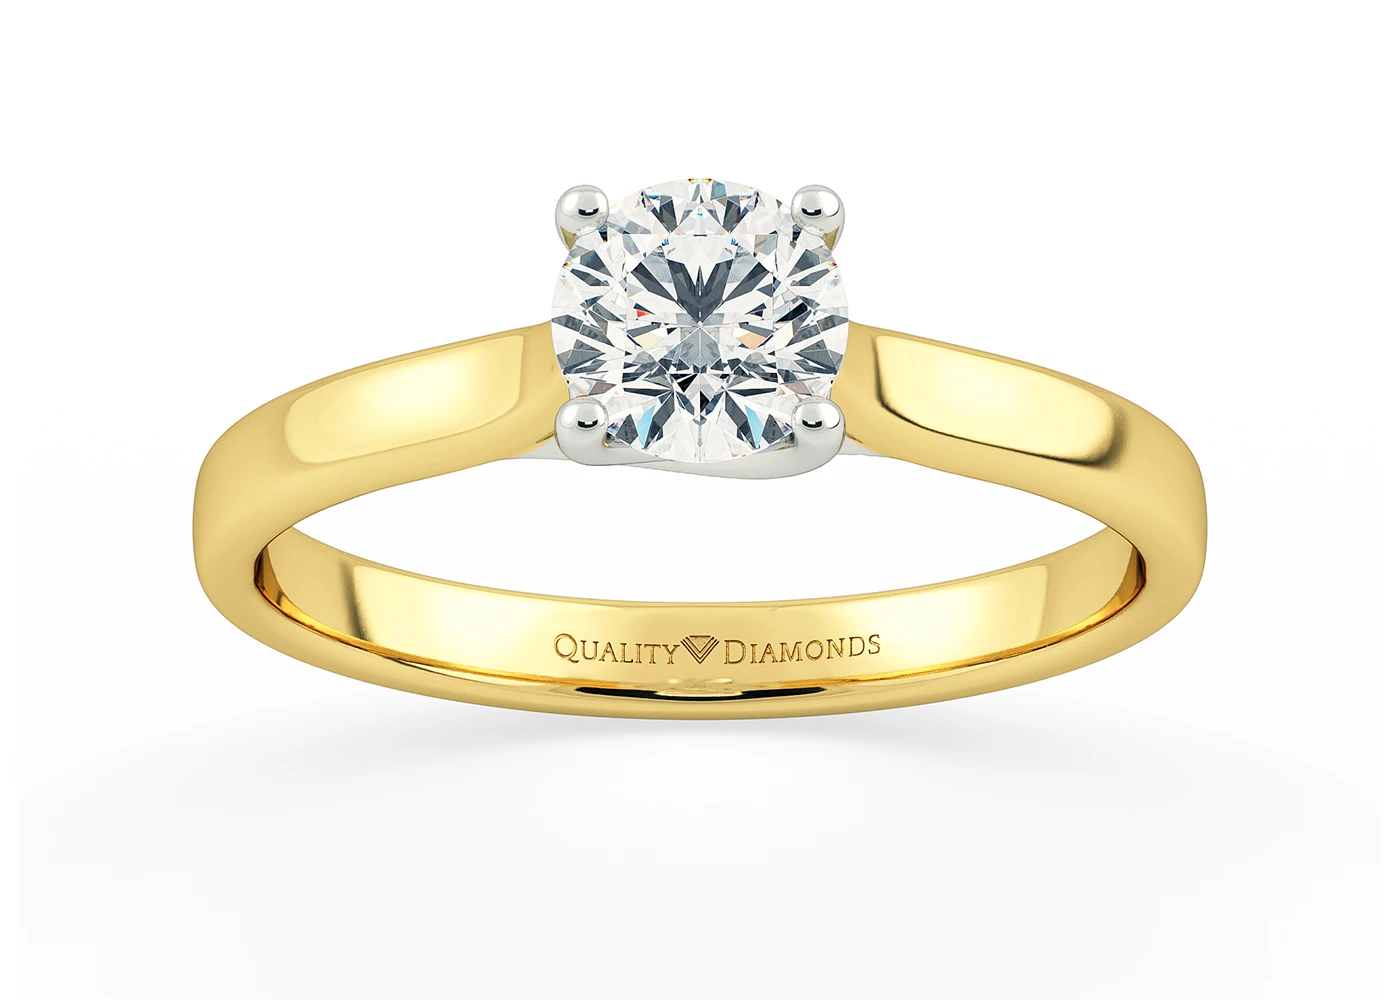 Round Brilliant Mirabelle Diamond Ring in 9K Yellow Gold